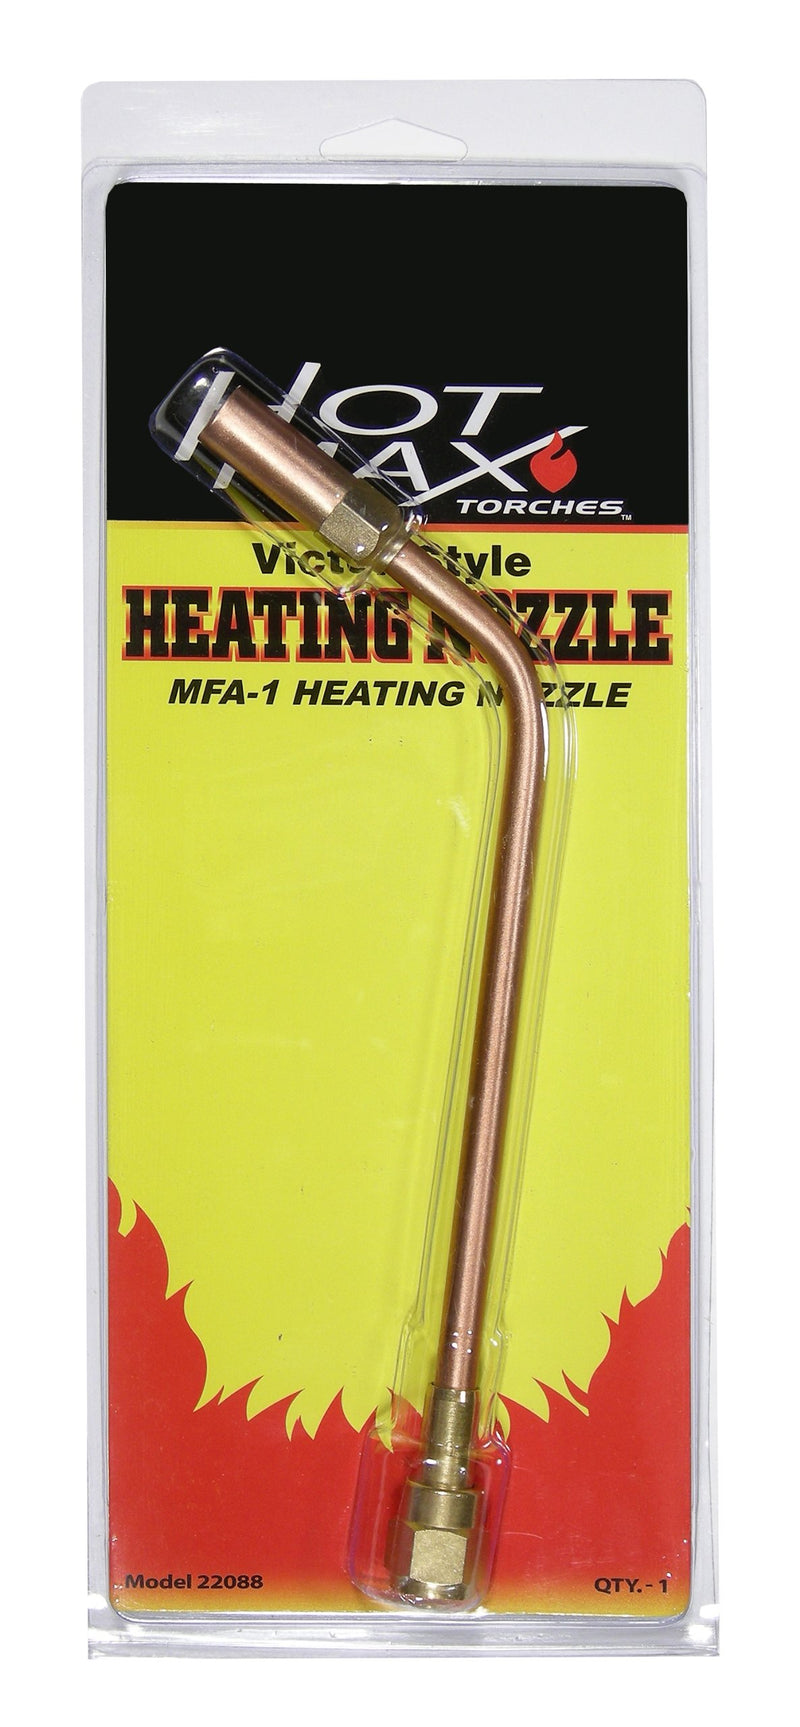  [AUSTRALIA] - Hot Max 22088 Victor Style Medium Duty Rosebud Heating Nozzle for Oxy-Acetylene, 6, 6MFA-1